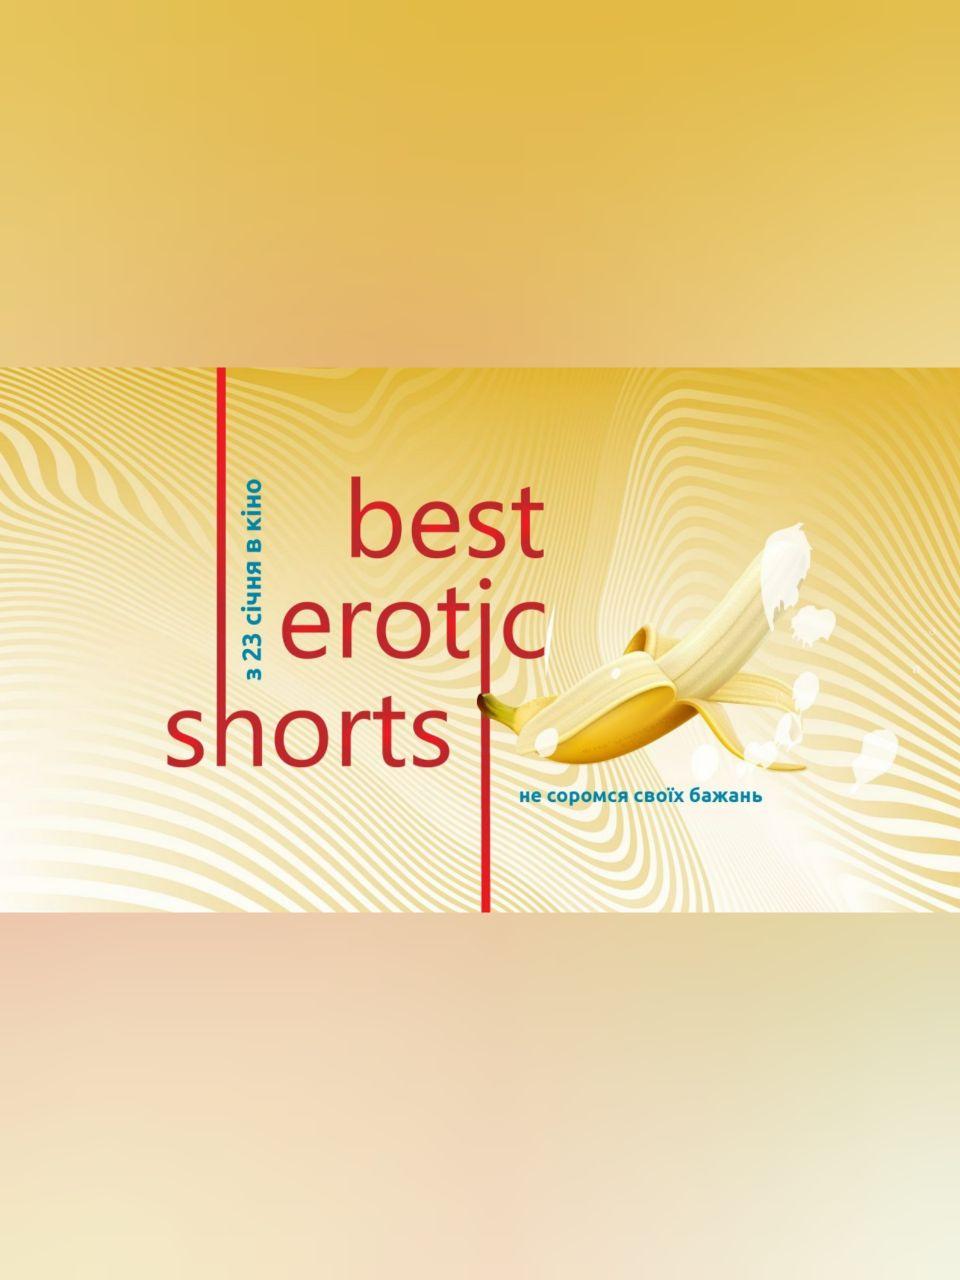 BEST Erotic Shorts 2020 Днепр, 10.07.2020, цена, купить билеты. Афиша Днепра